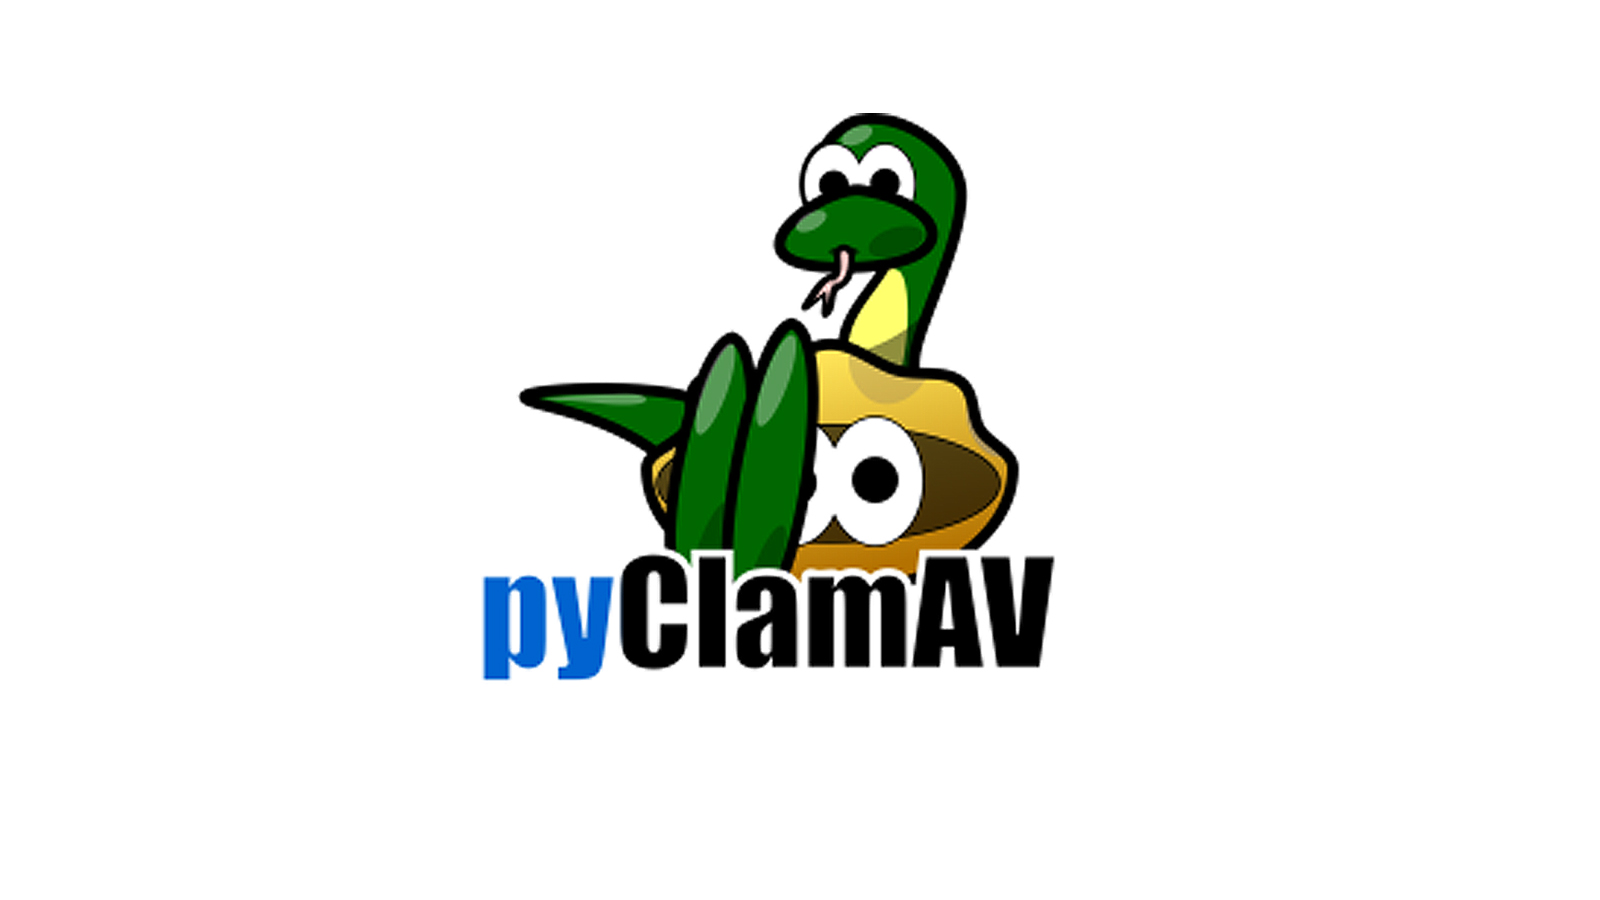 Clamav python interface